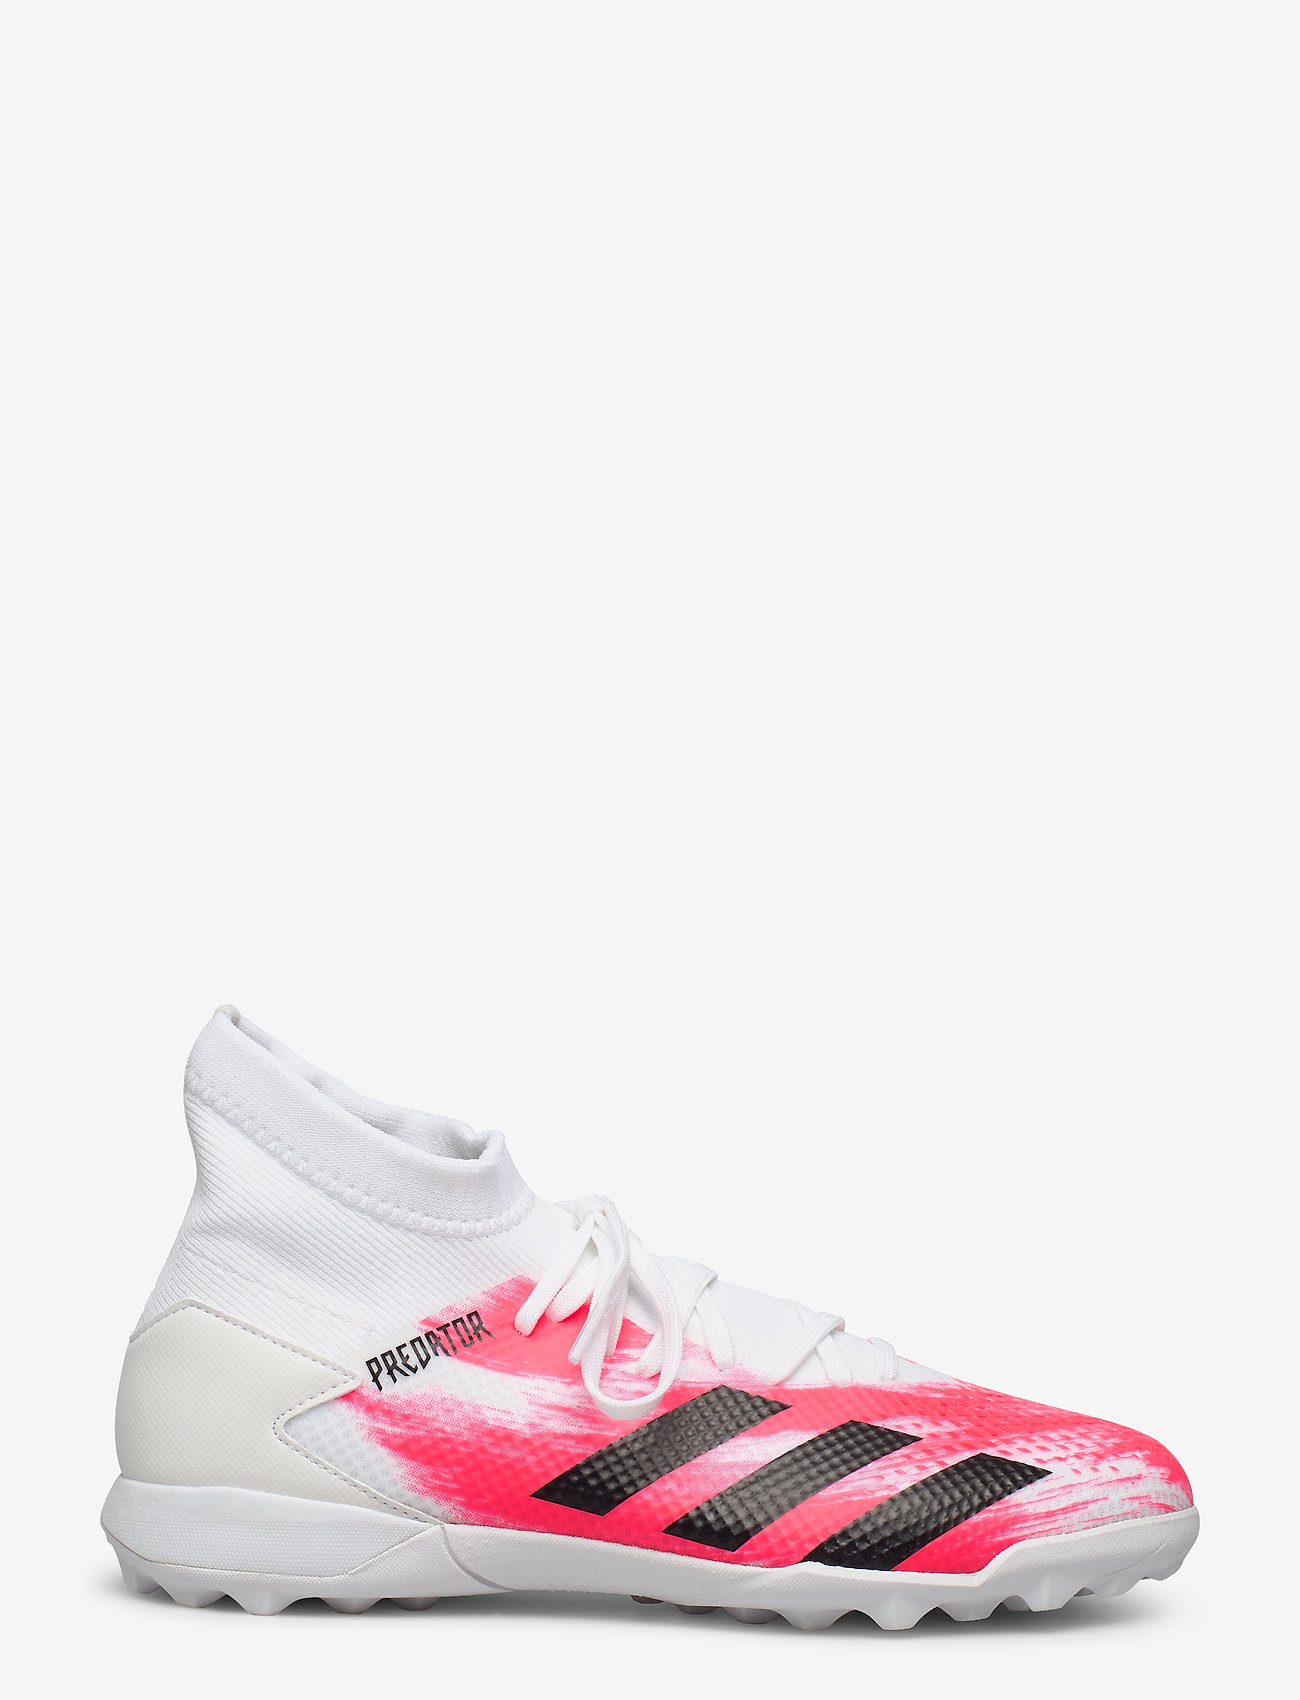 adidas predator 20.3 pink